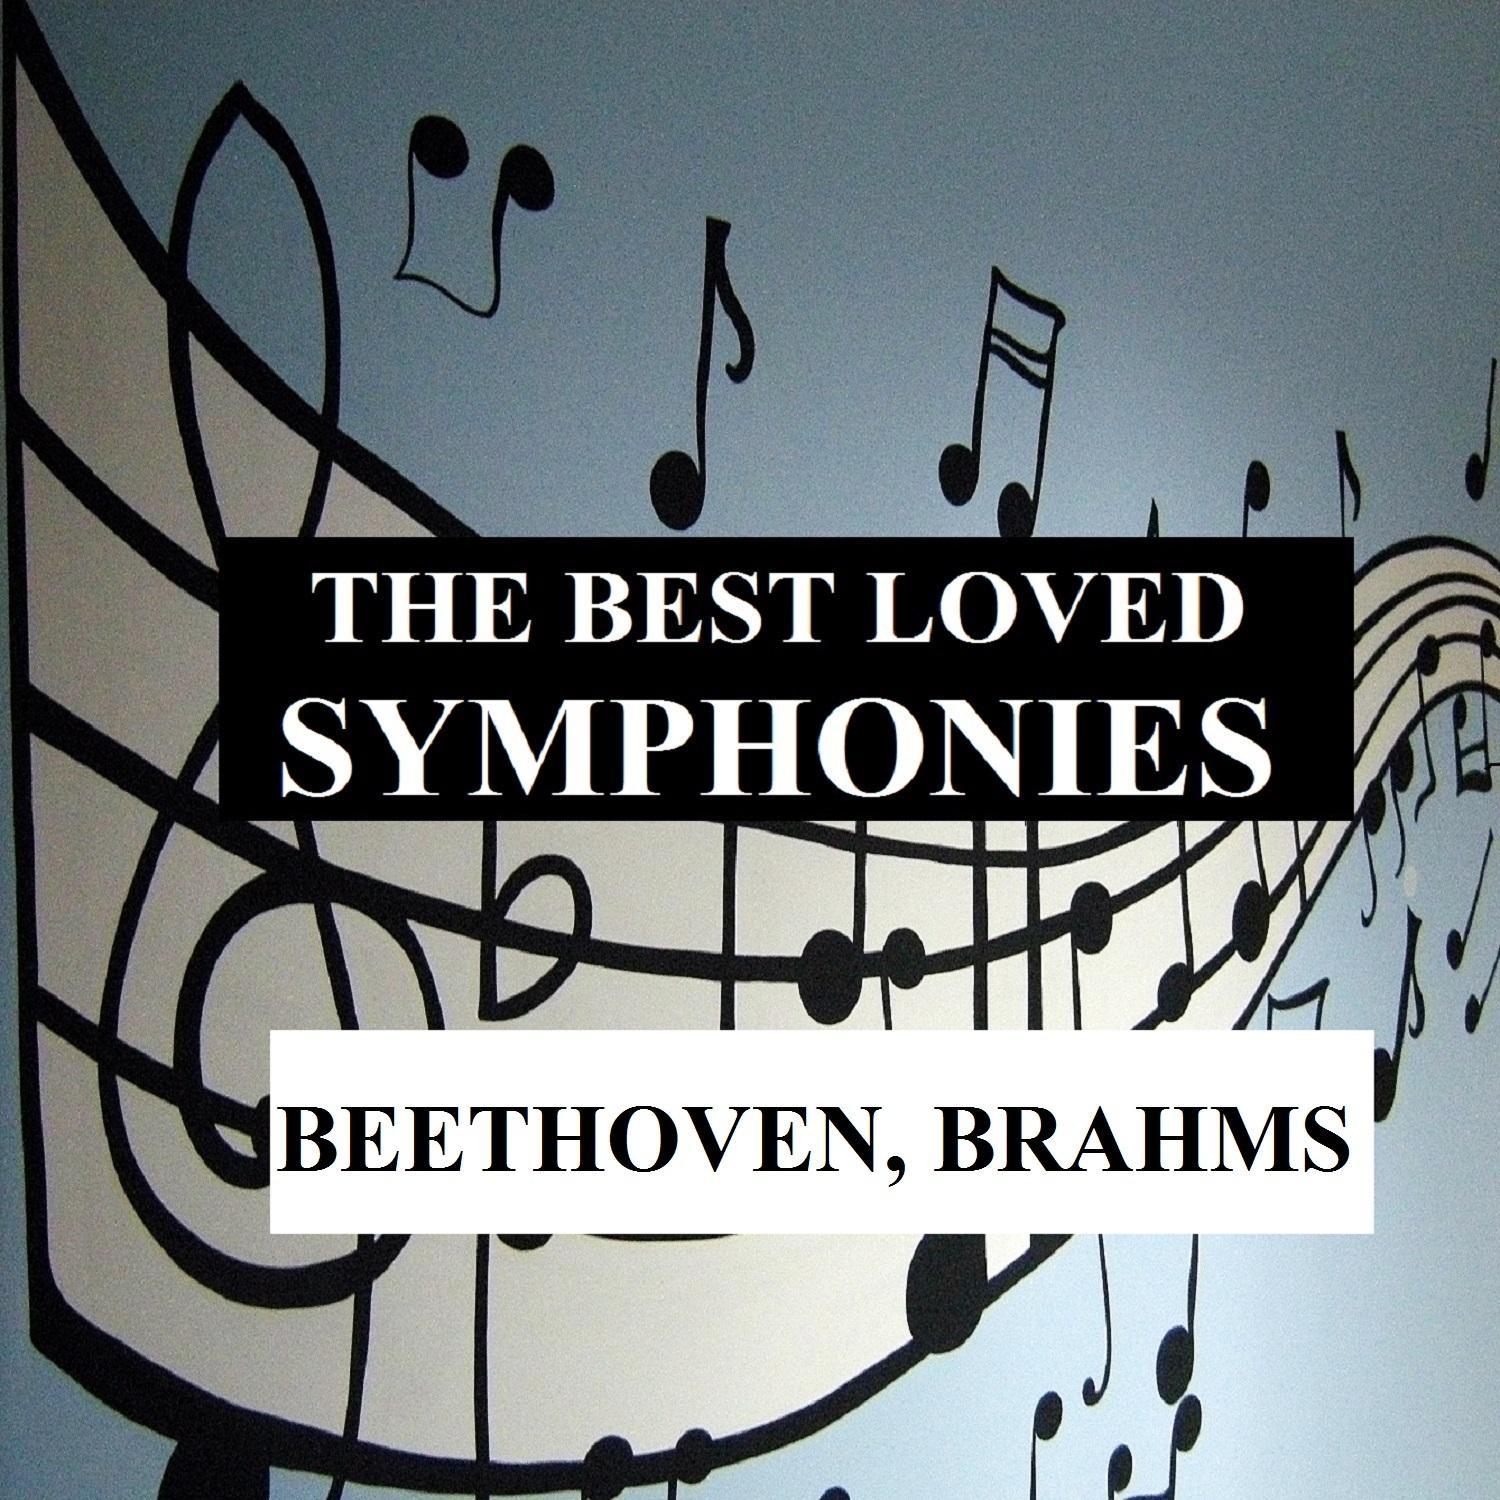 The Best Loved Symphonies - Beethoven, Brahms